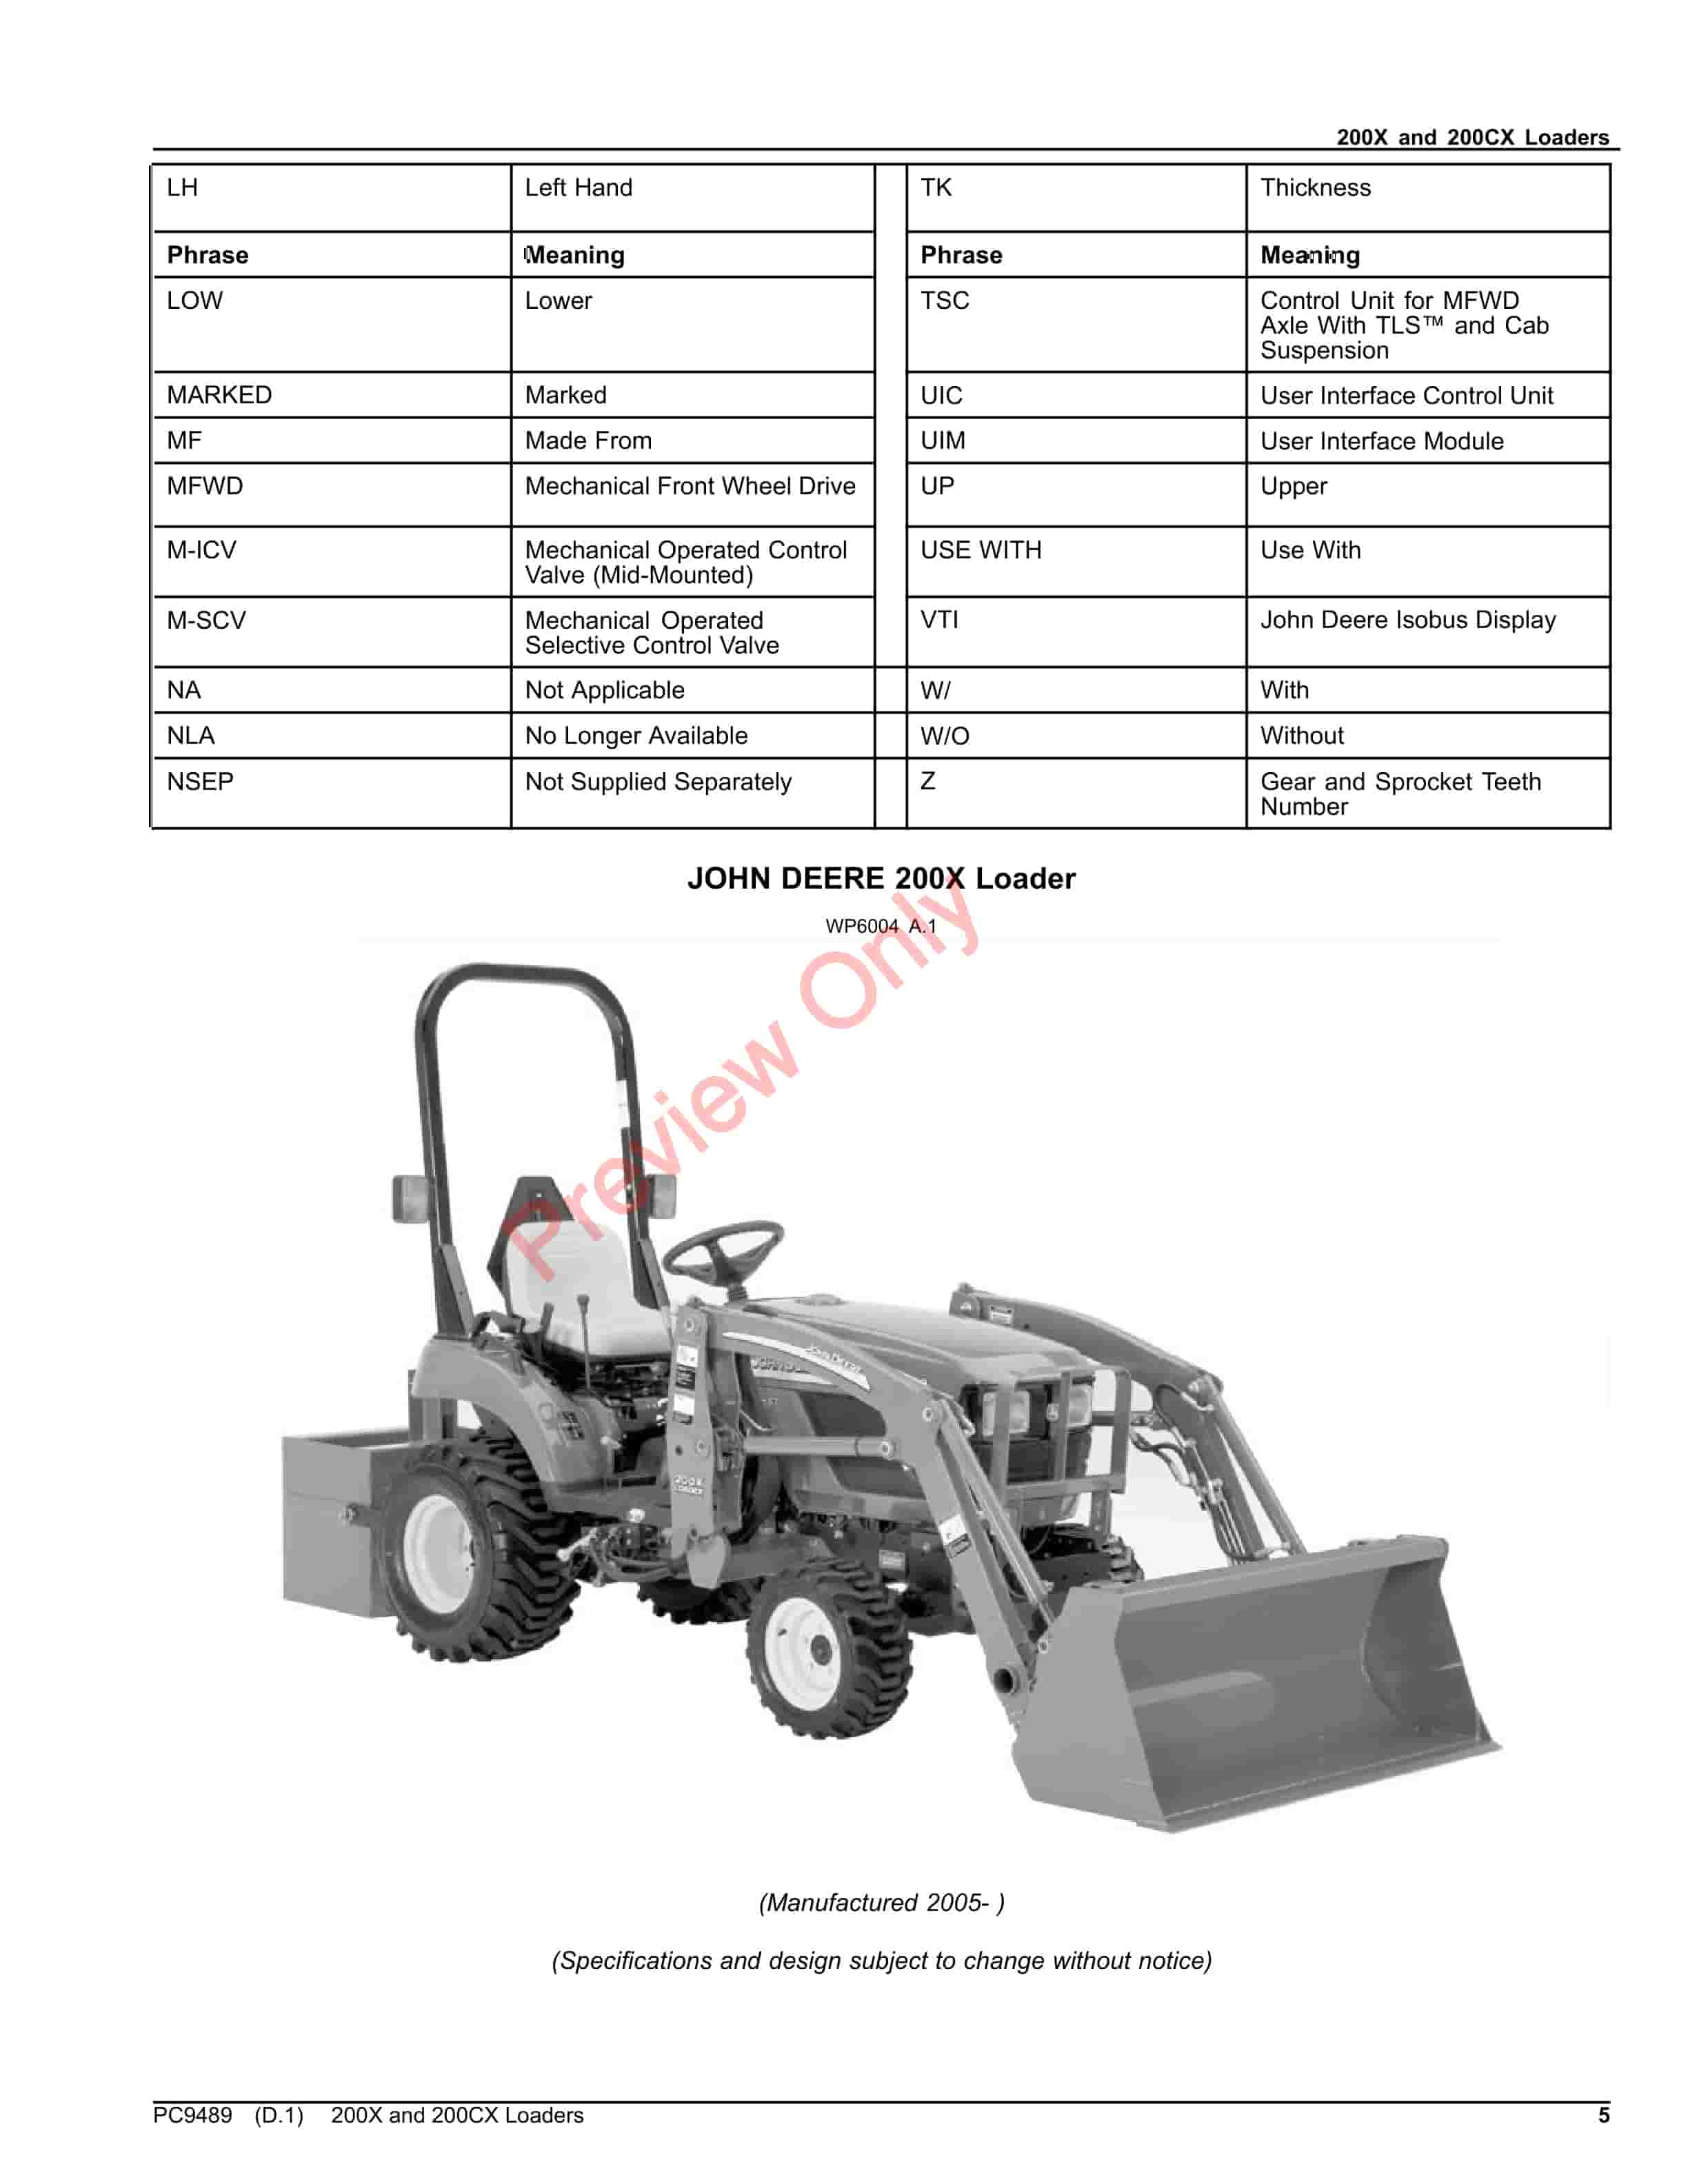 John Deere 200X, 200CX Loader Parts Catalog PC9489 11SEP20-5